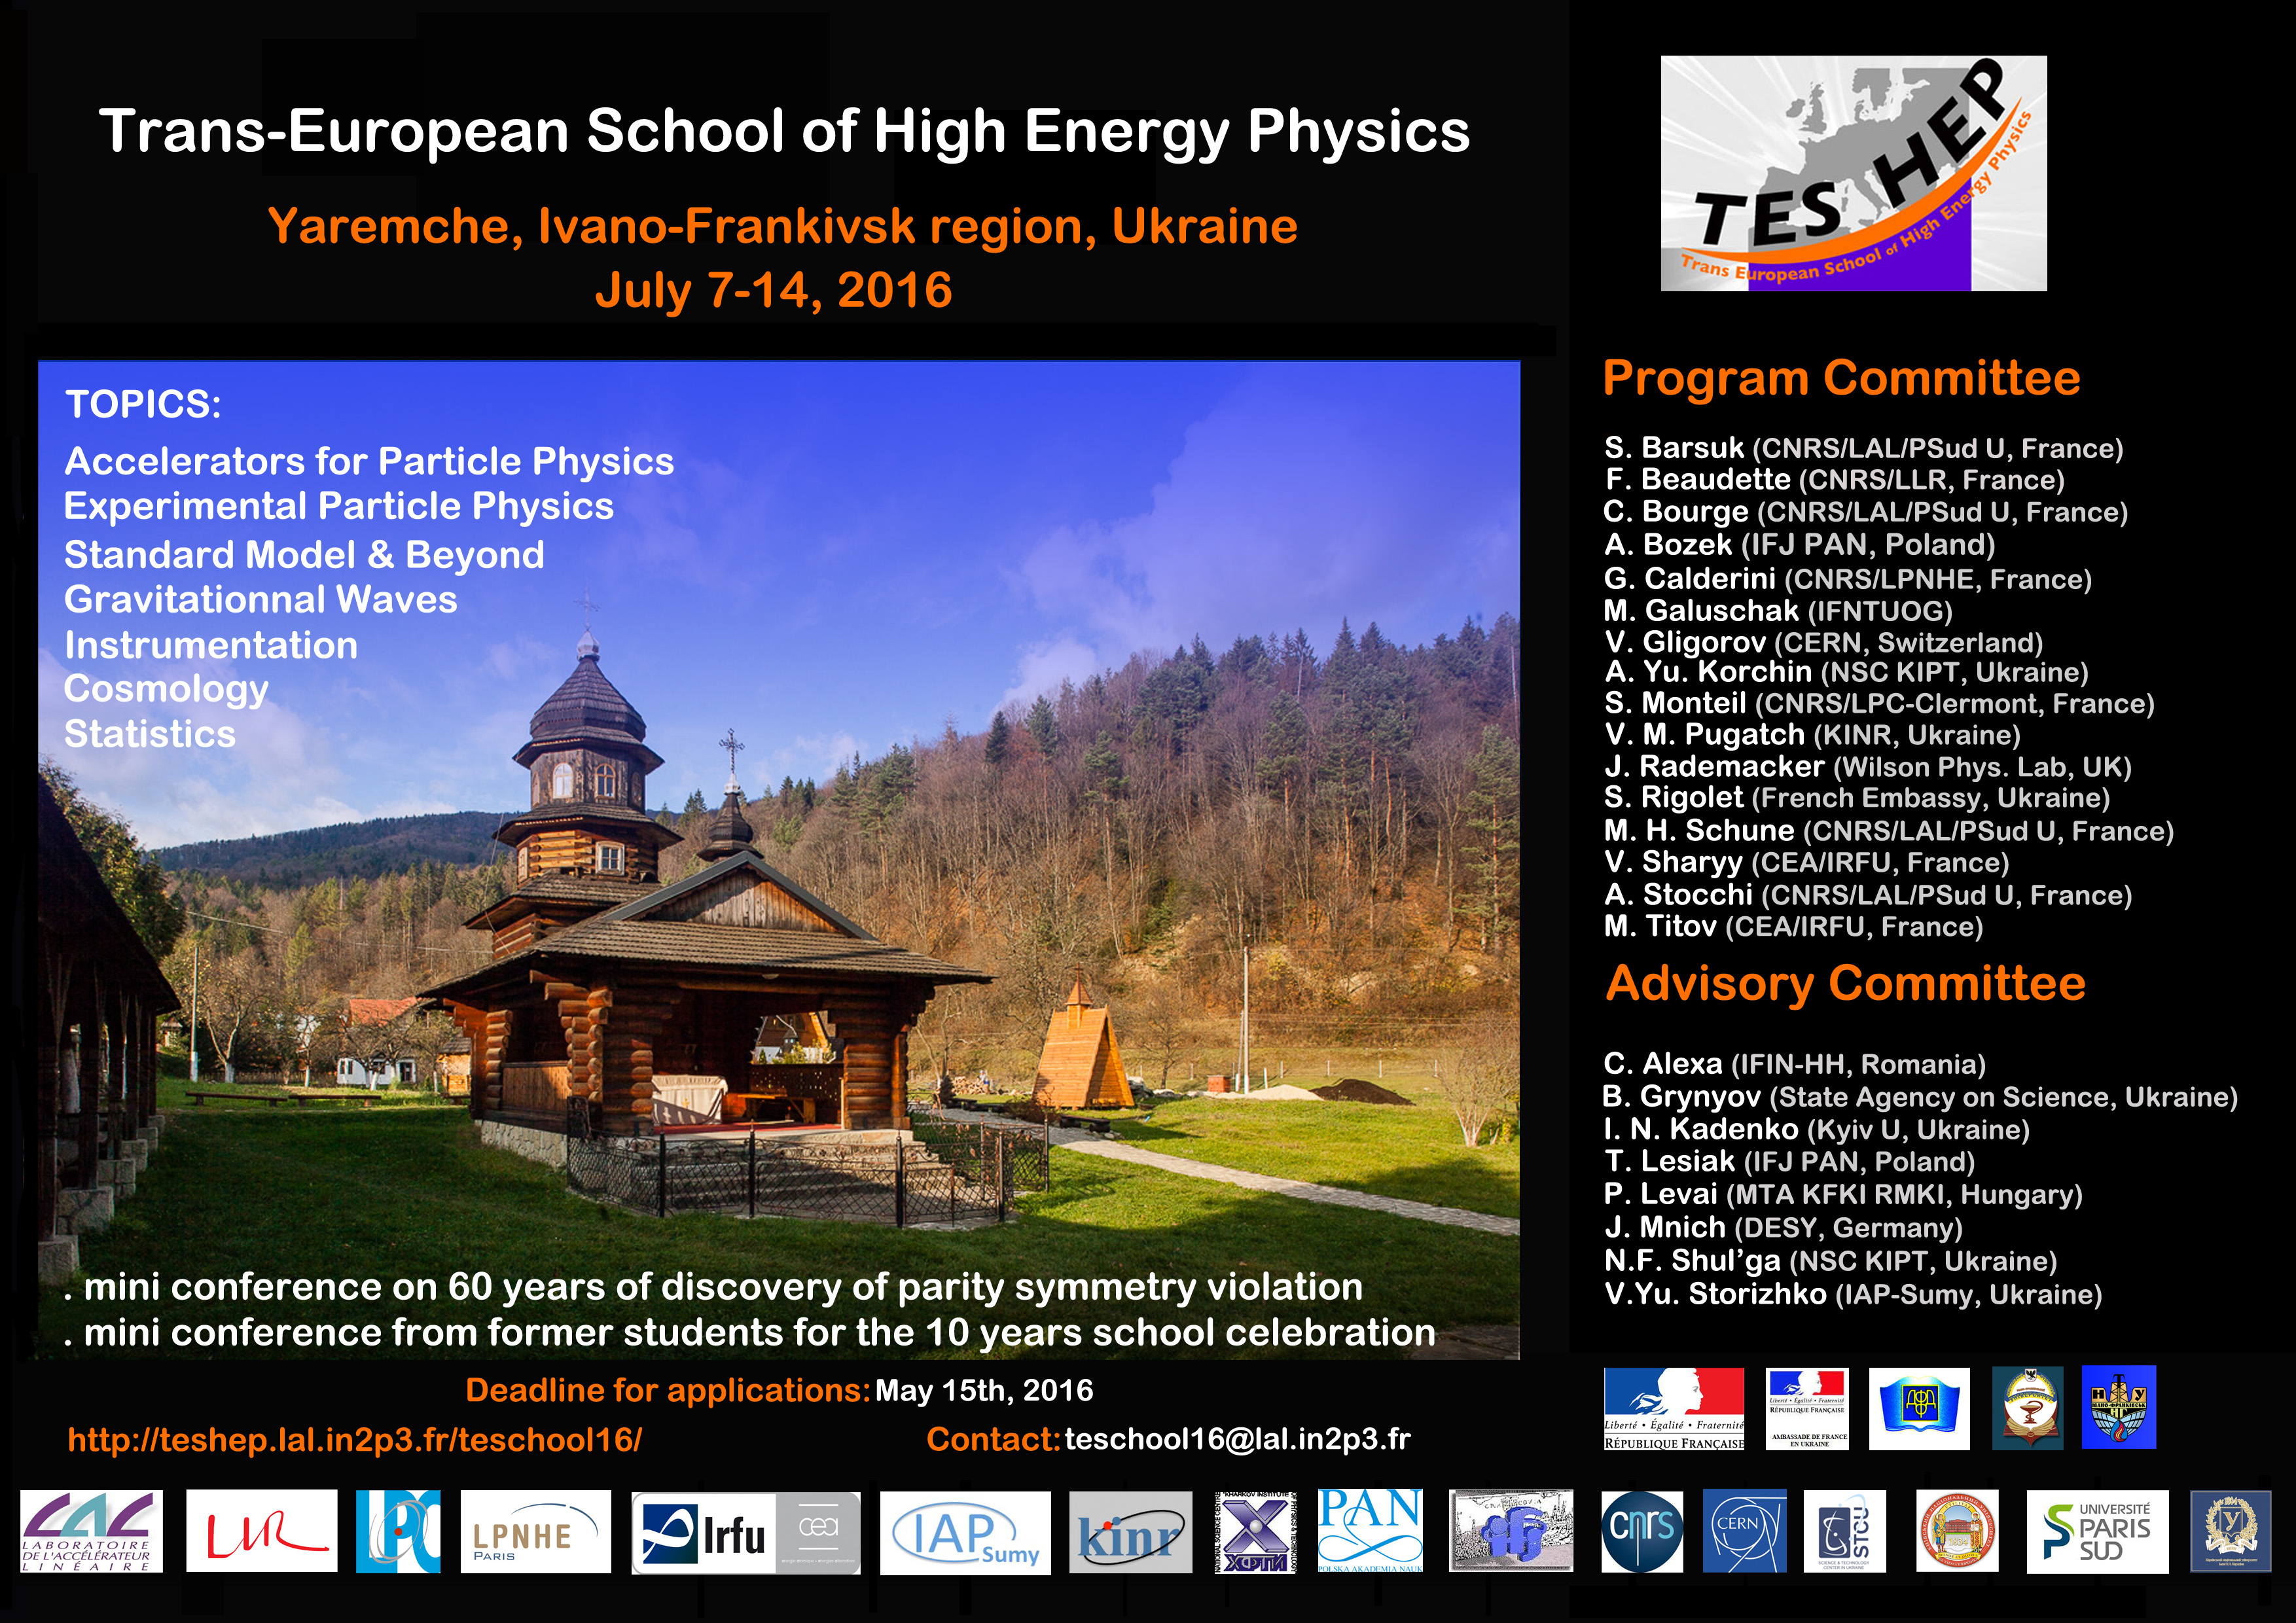 The Trans-European School of High Energy Physics